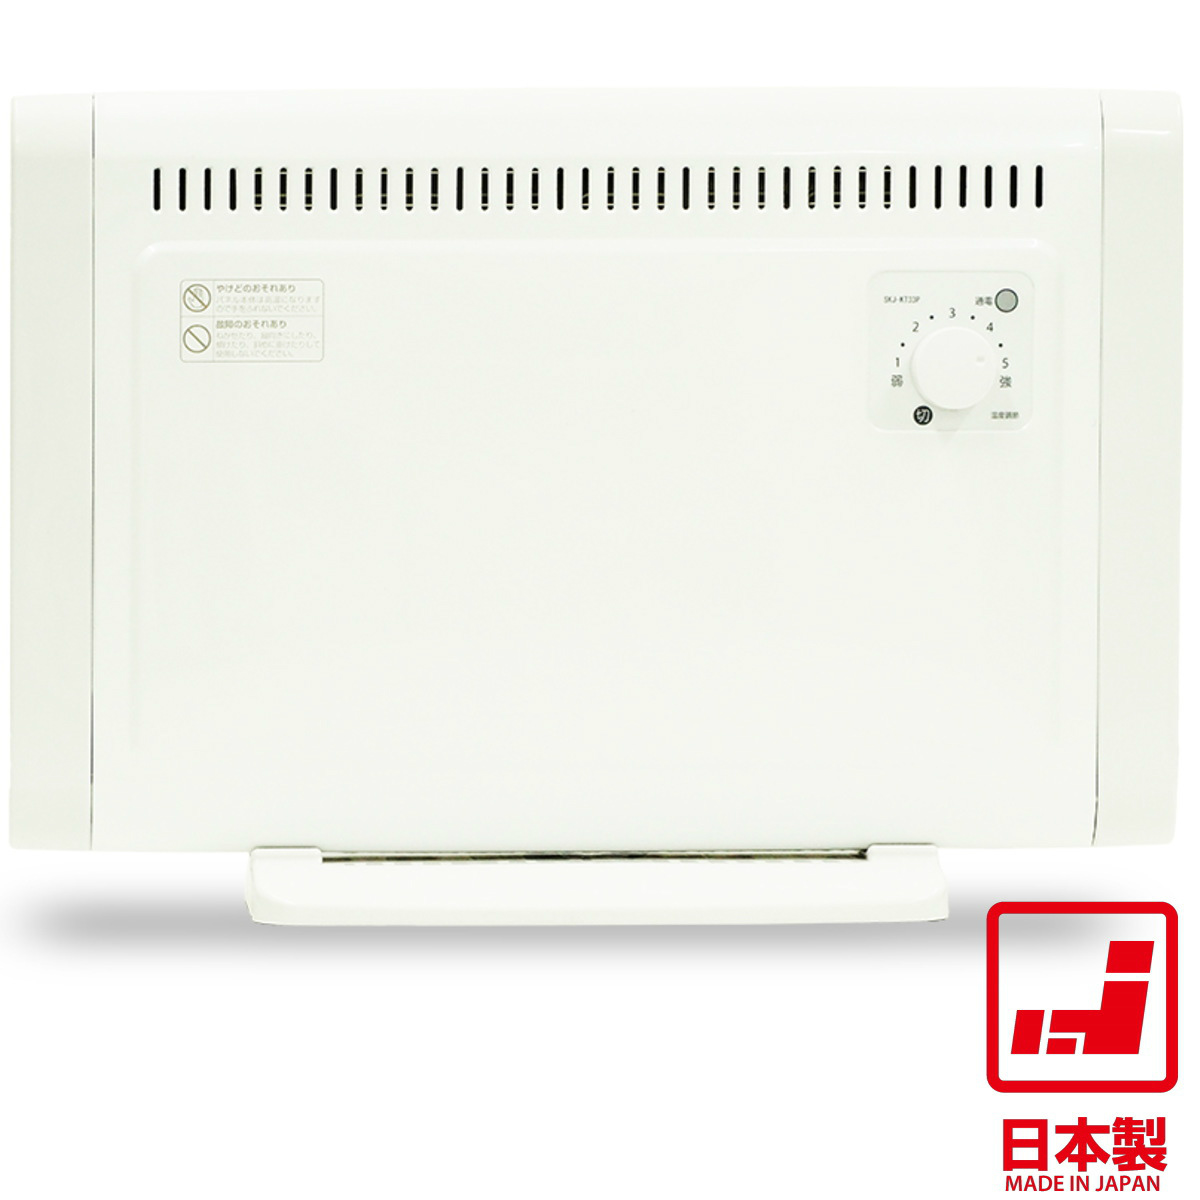 SKJ ミニパネルヒーター SKJ-KT35P | 壁掛け対応 室温反応で入切サーモ 